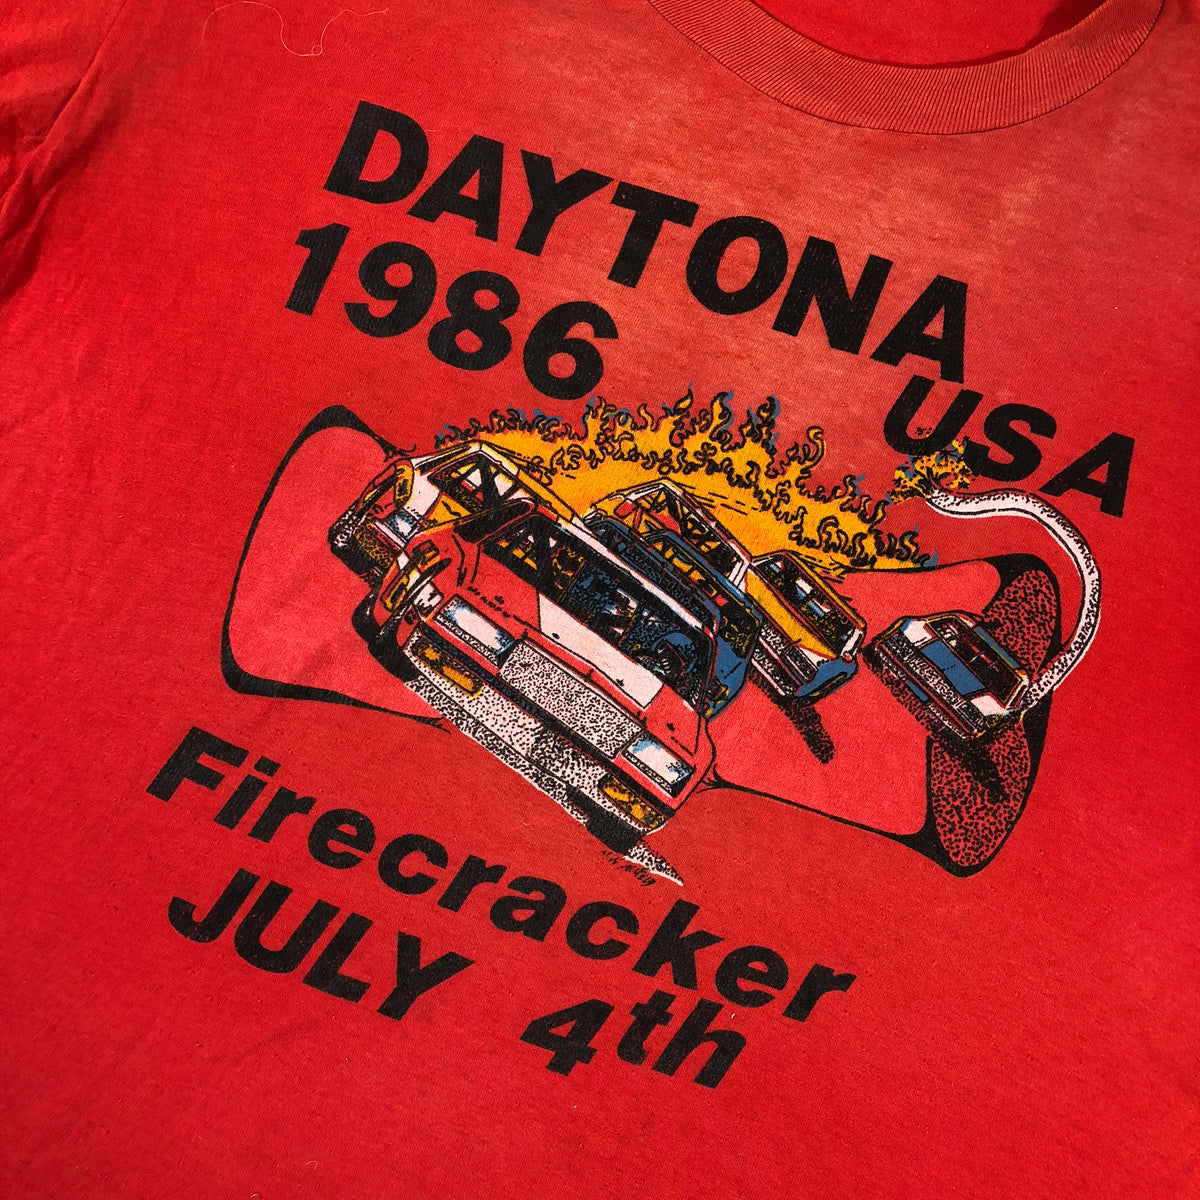 Vintage Daytona 500 &quot;Firecracker &#39;86&quot; T-Shirt - jointcustodydc